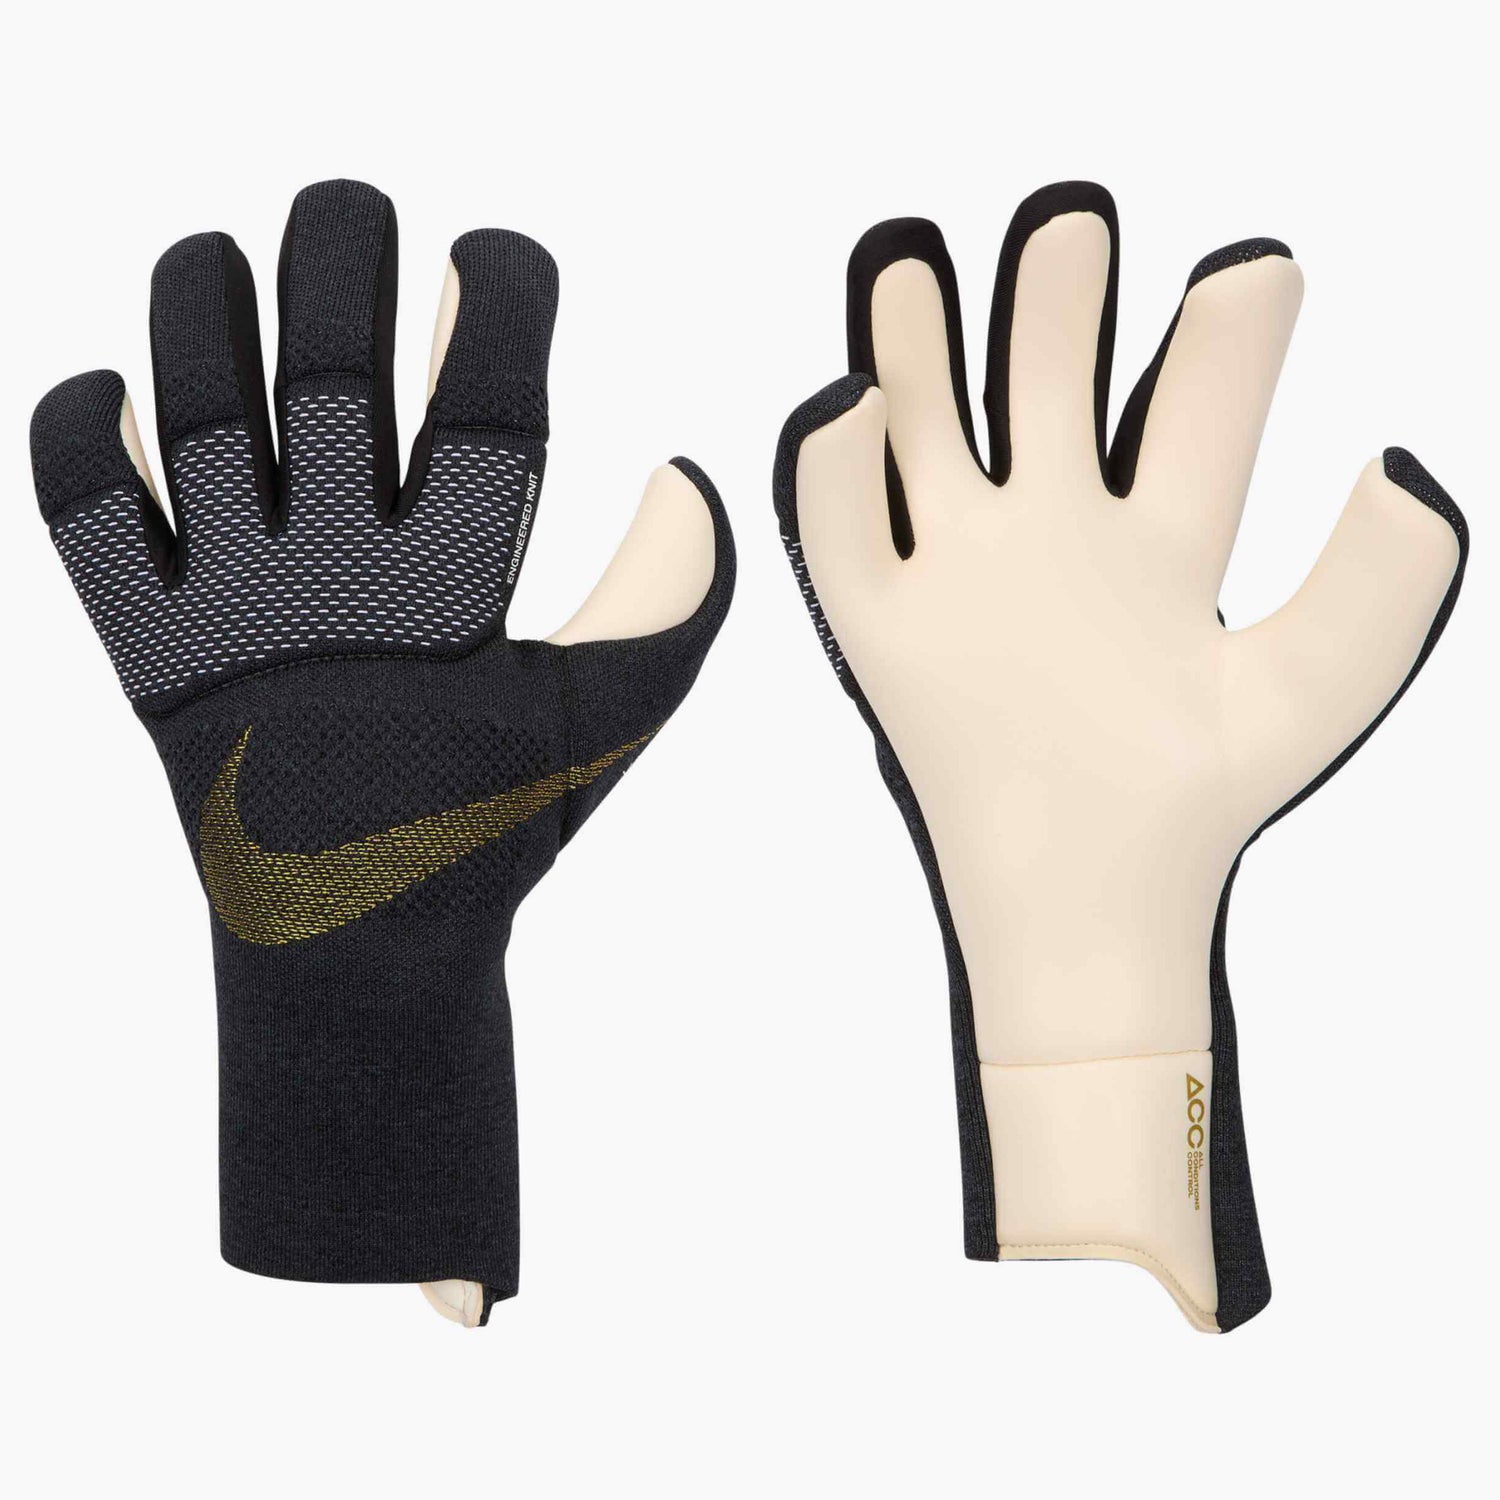 Nike Vapor Dynamic Fit Goalkeeper Gloves (Pair)